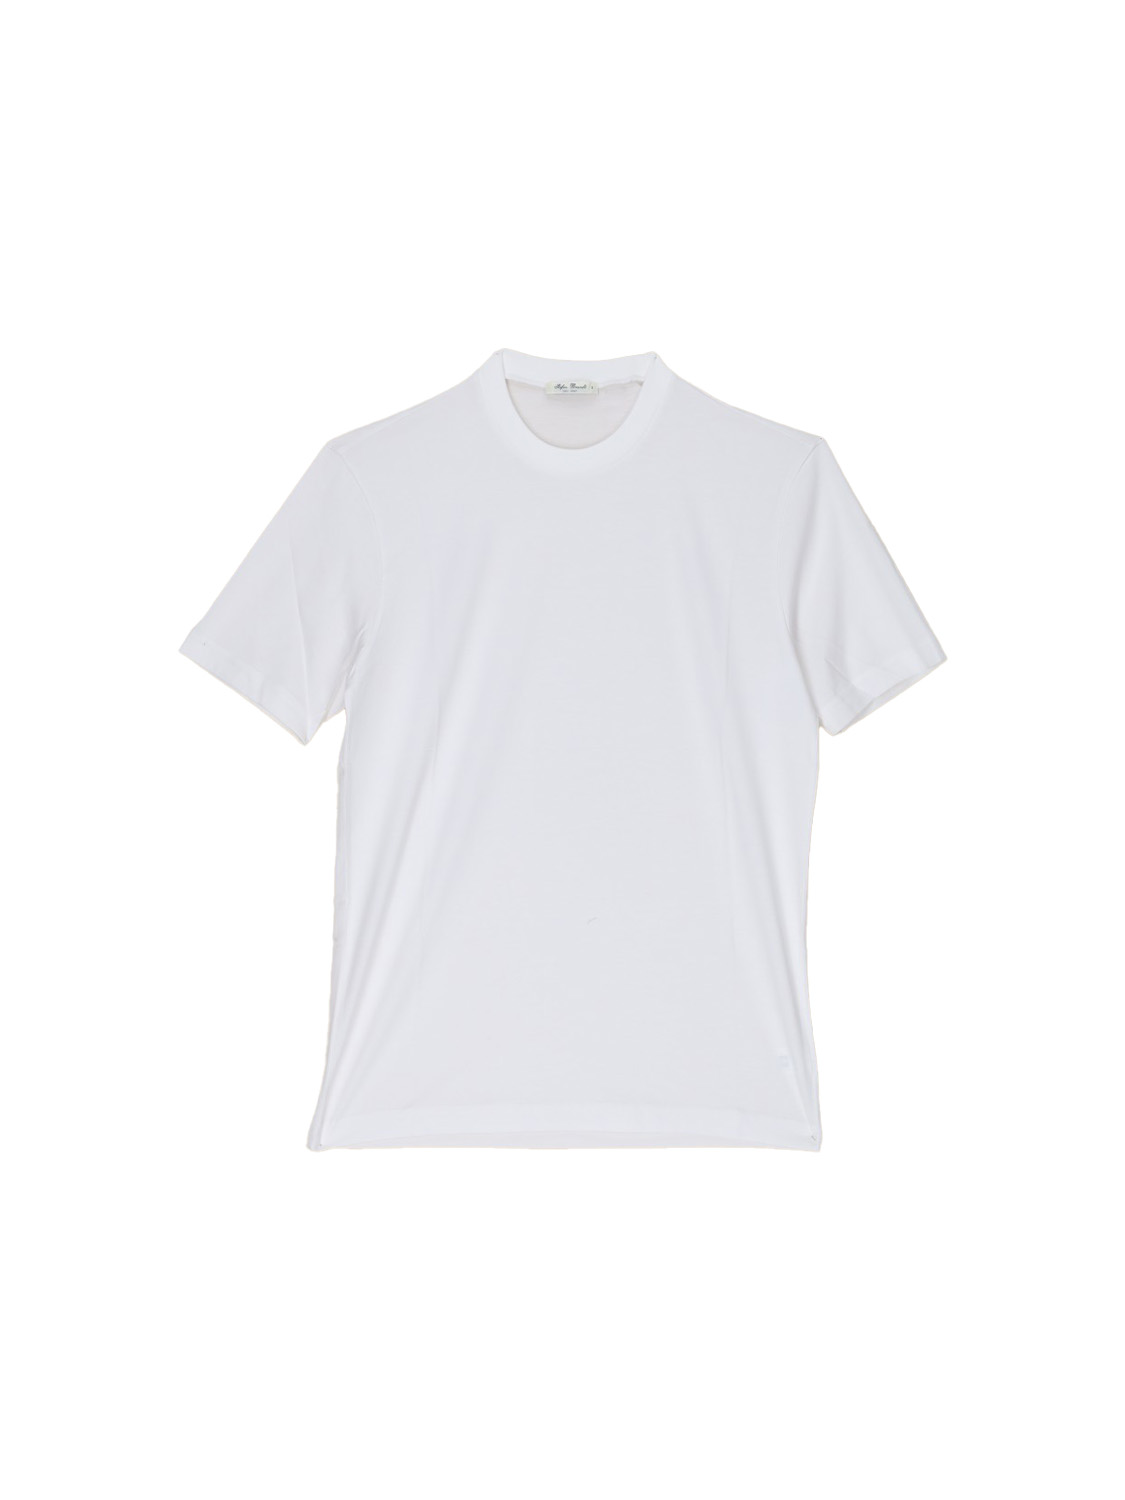 Stefan Brandt Eli 30 - Crew Neck T-Shirt made of cotton white XL